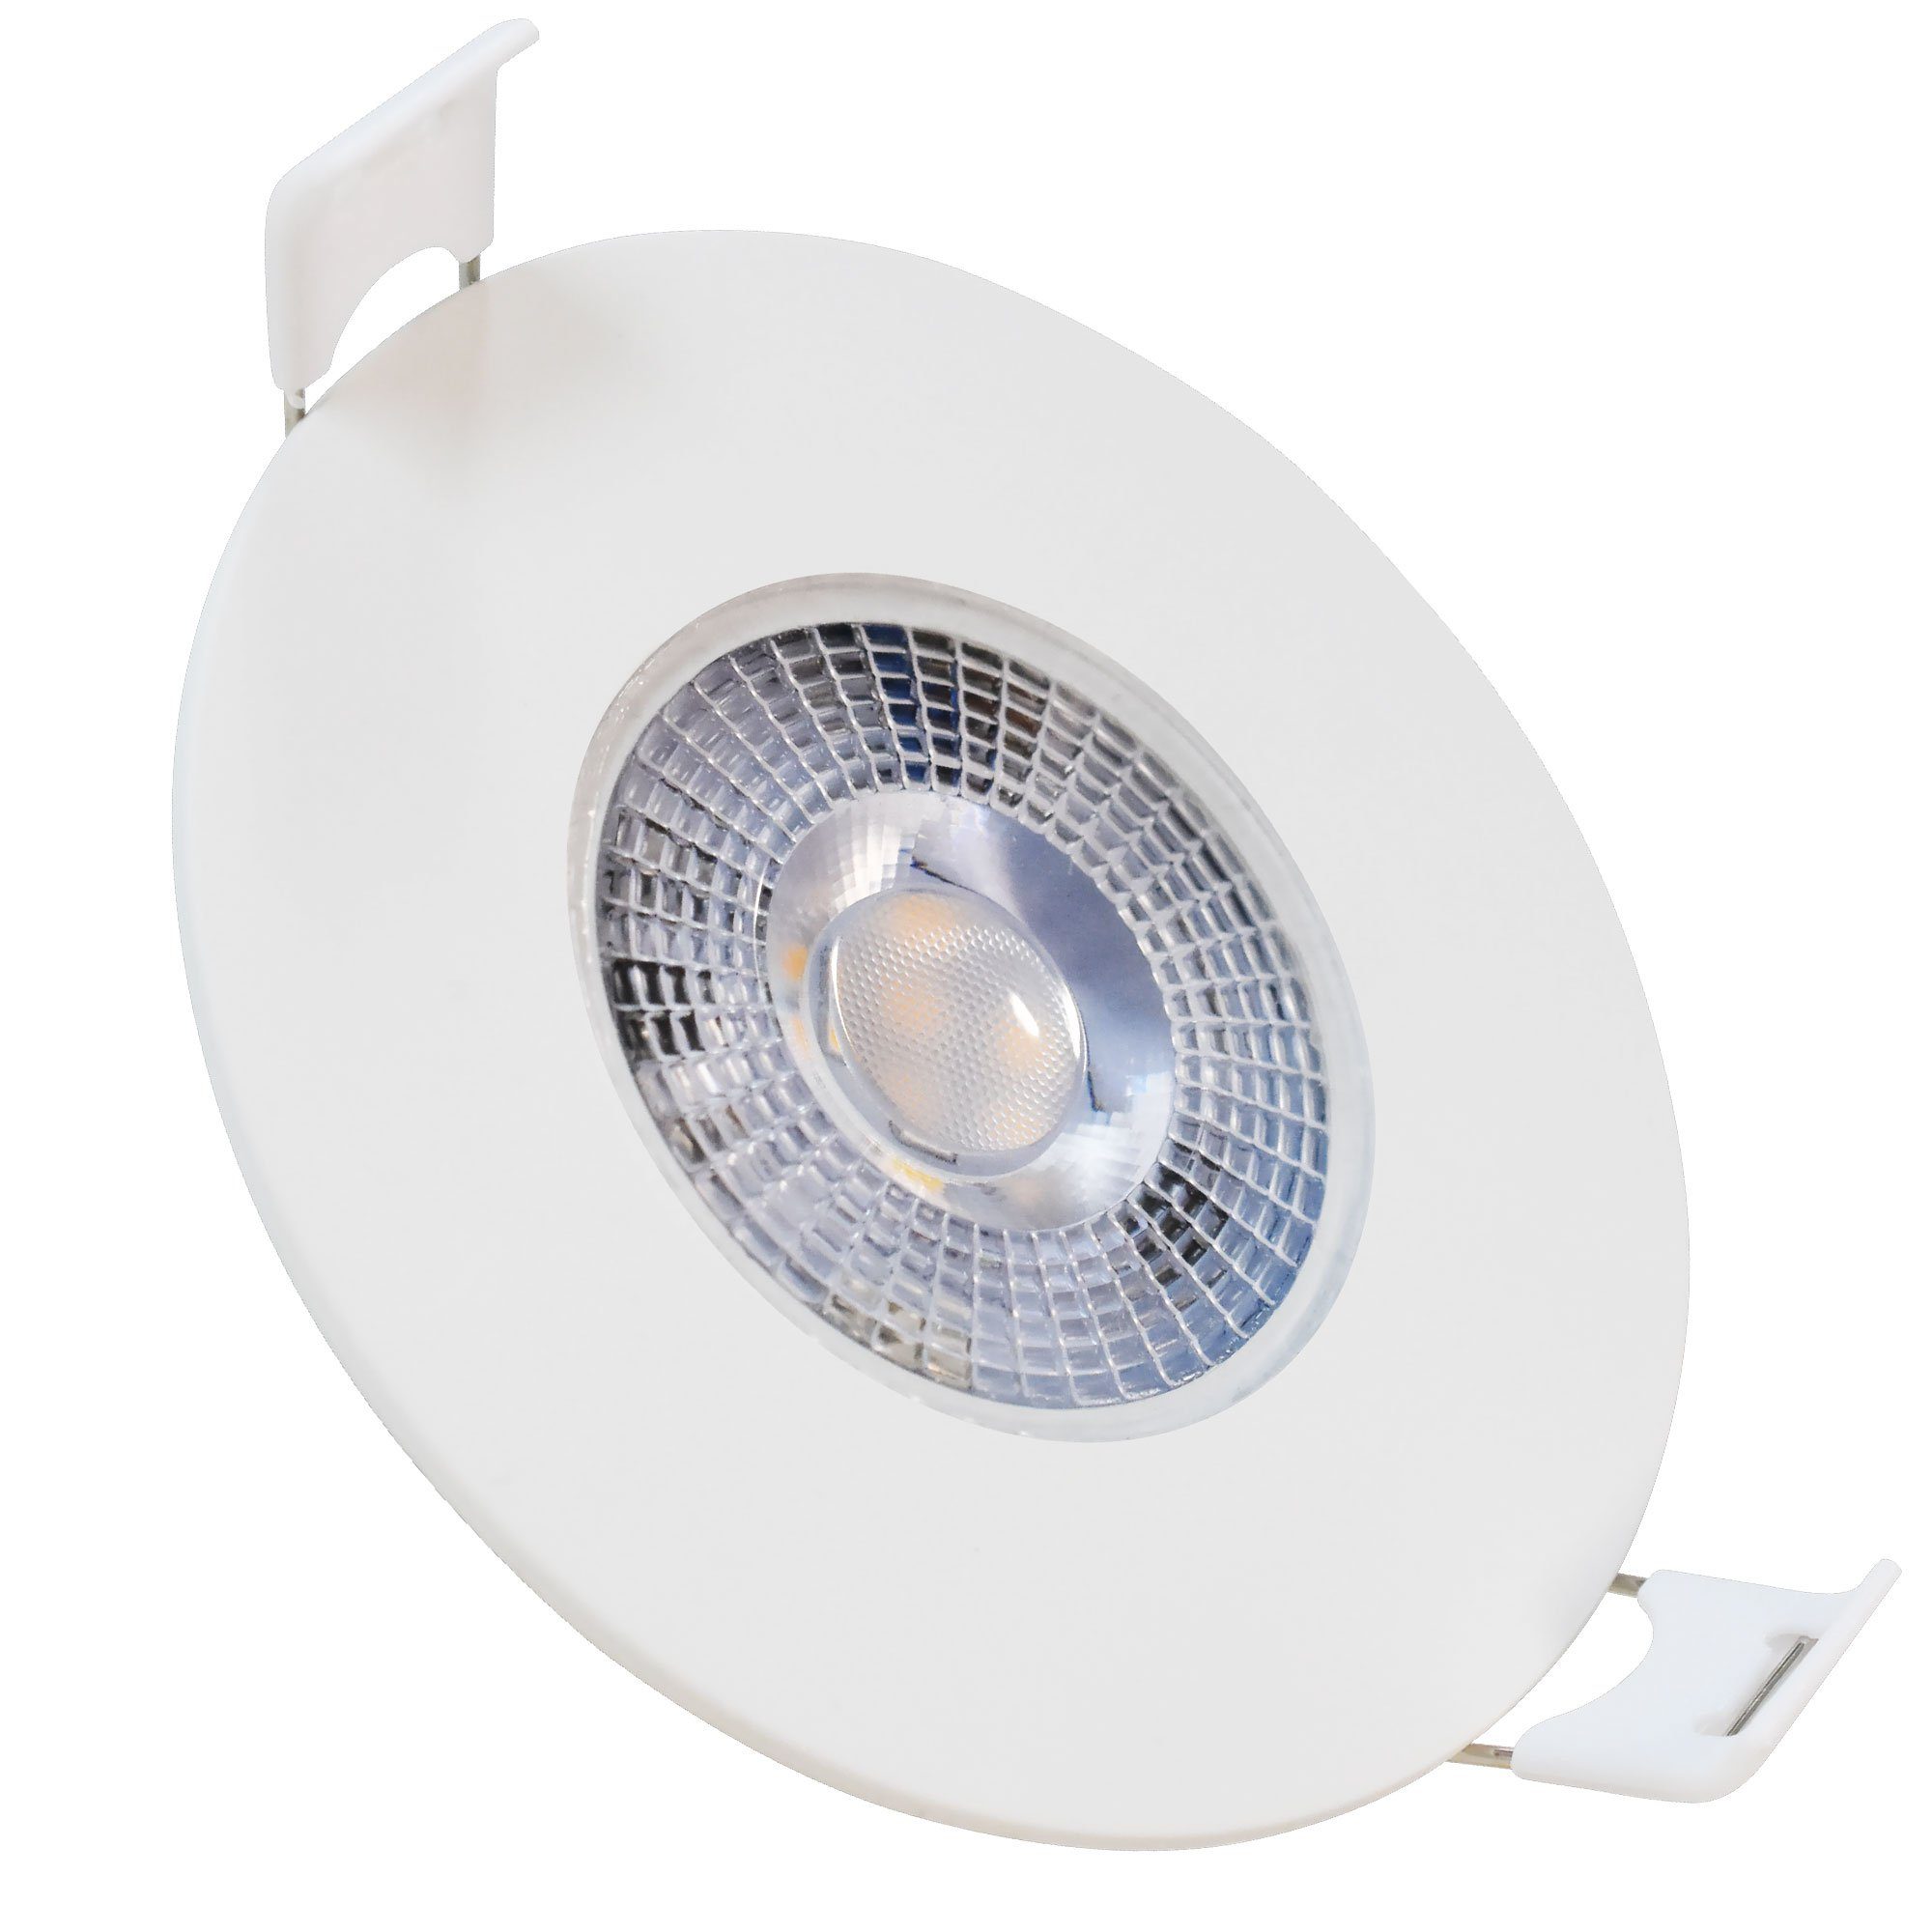 GU10 LED Spot / Strahler 10° Abstrahlwinkel 500lm 6W kalt weiß 6000-6500K  230V, kalt weiß, GU10 LED Strahler, LED Leuchtmittel